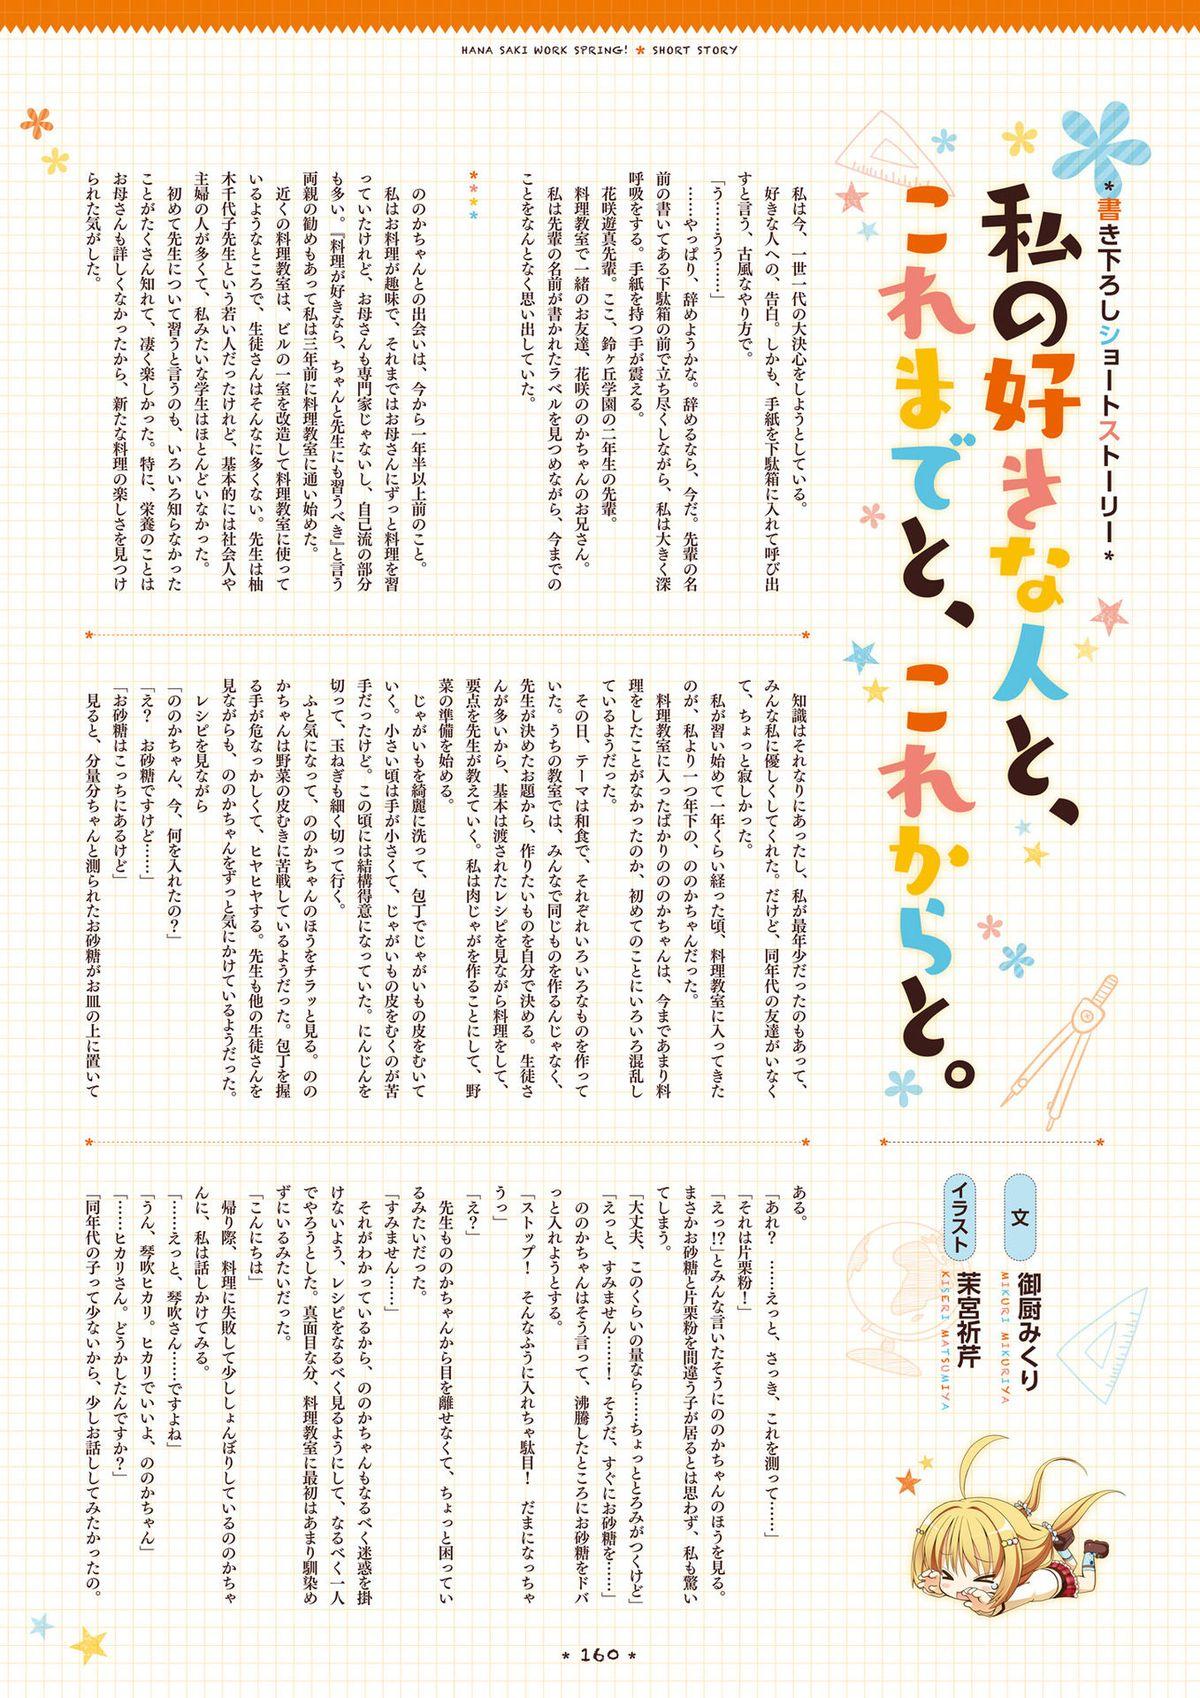 Hanasaki Work Spring! Visual Fanbook 157